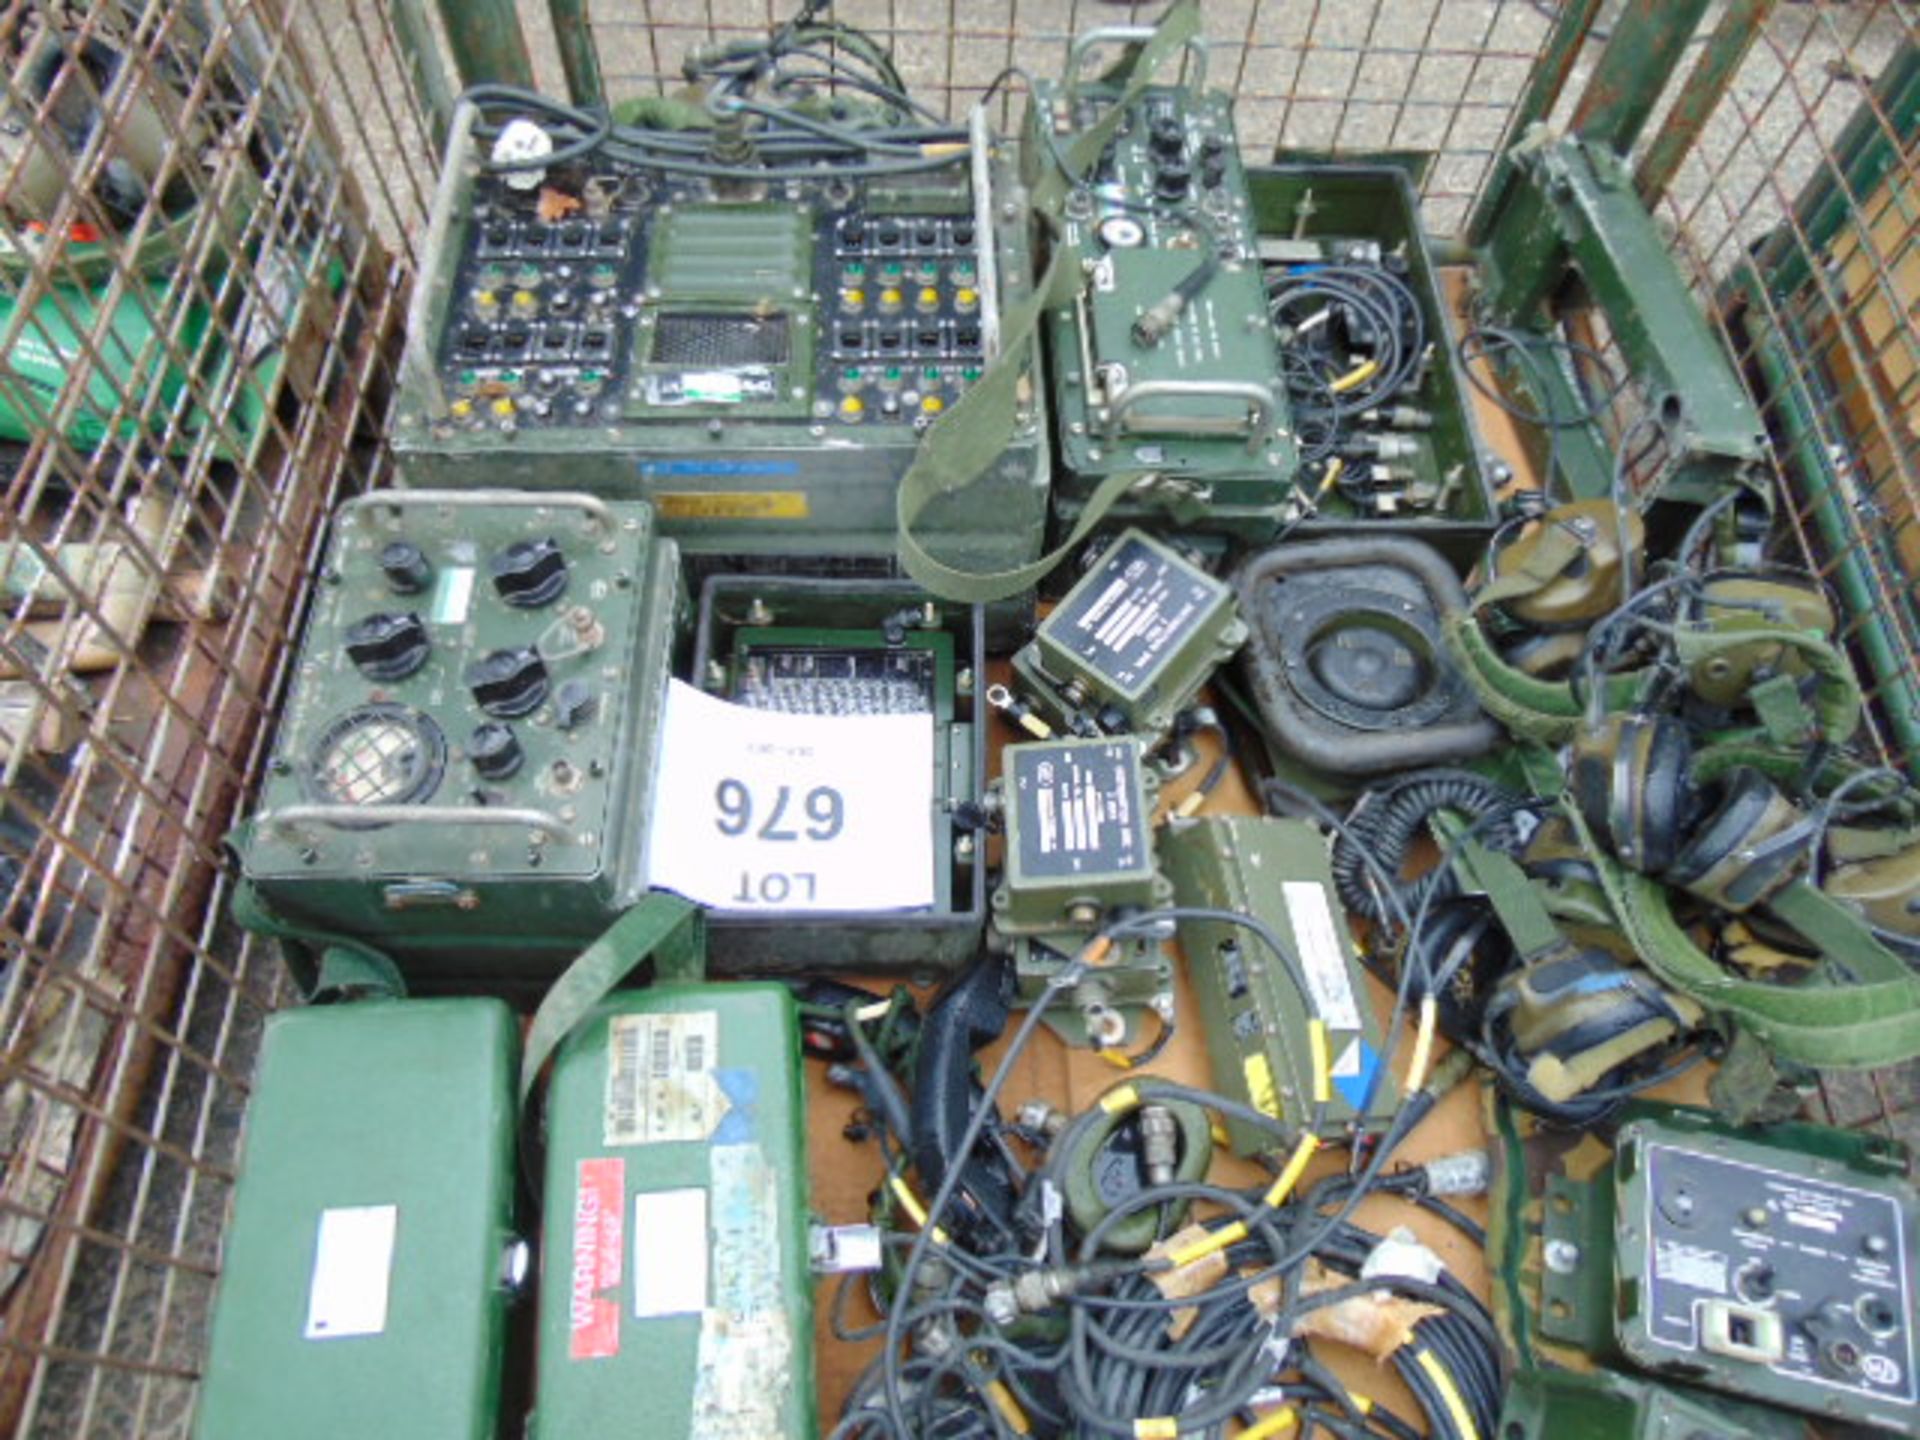 1 x Stillage of Clansman radio equipment inc chargers, Head set etc - Image 3 of 4